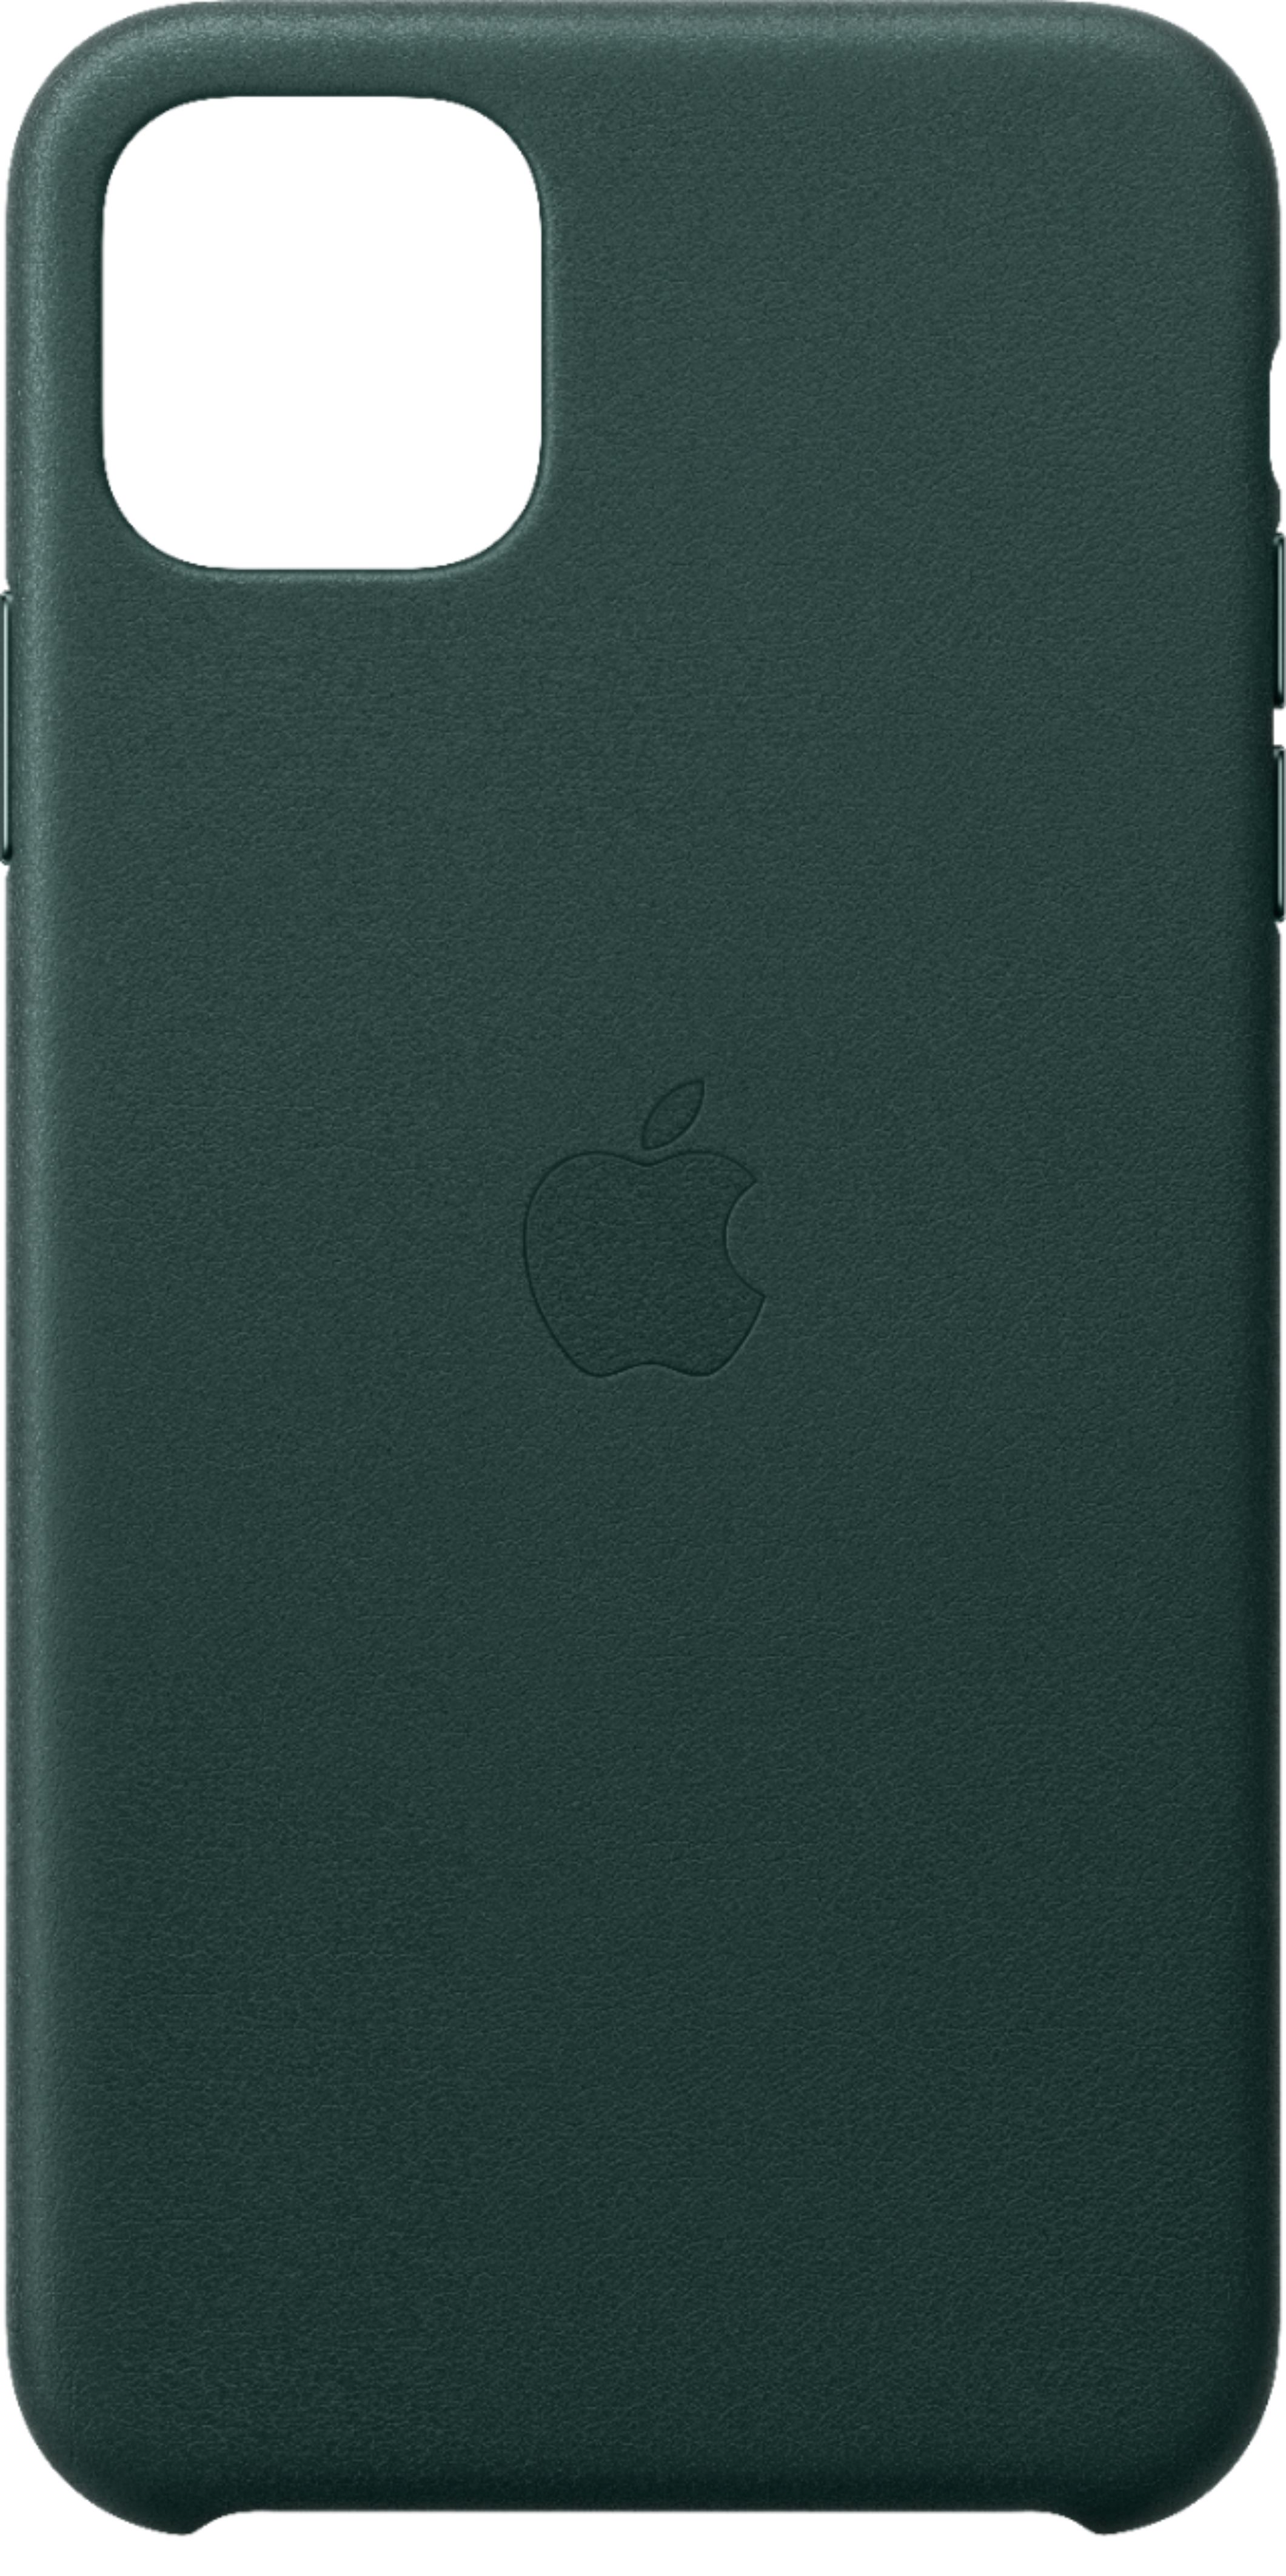 Buy Folio Grip Case Green iPhone